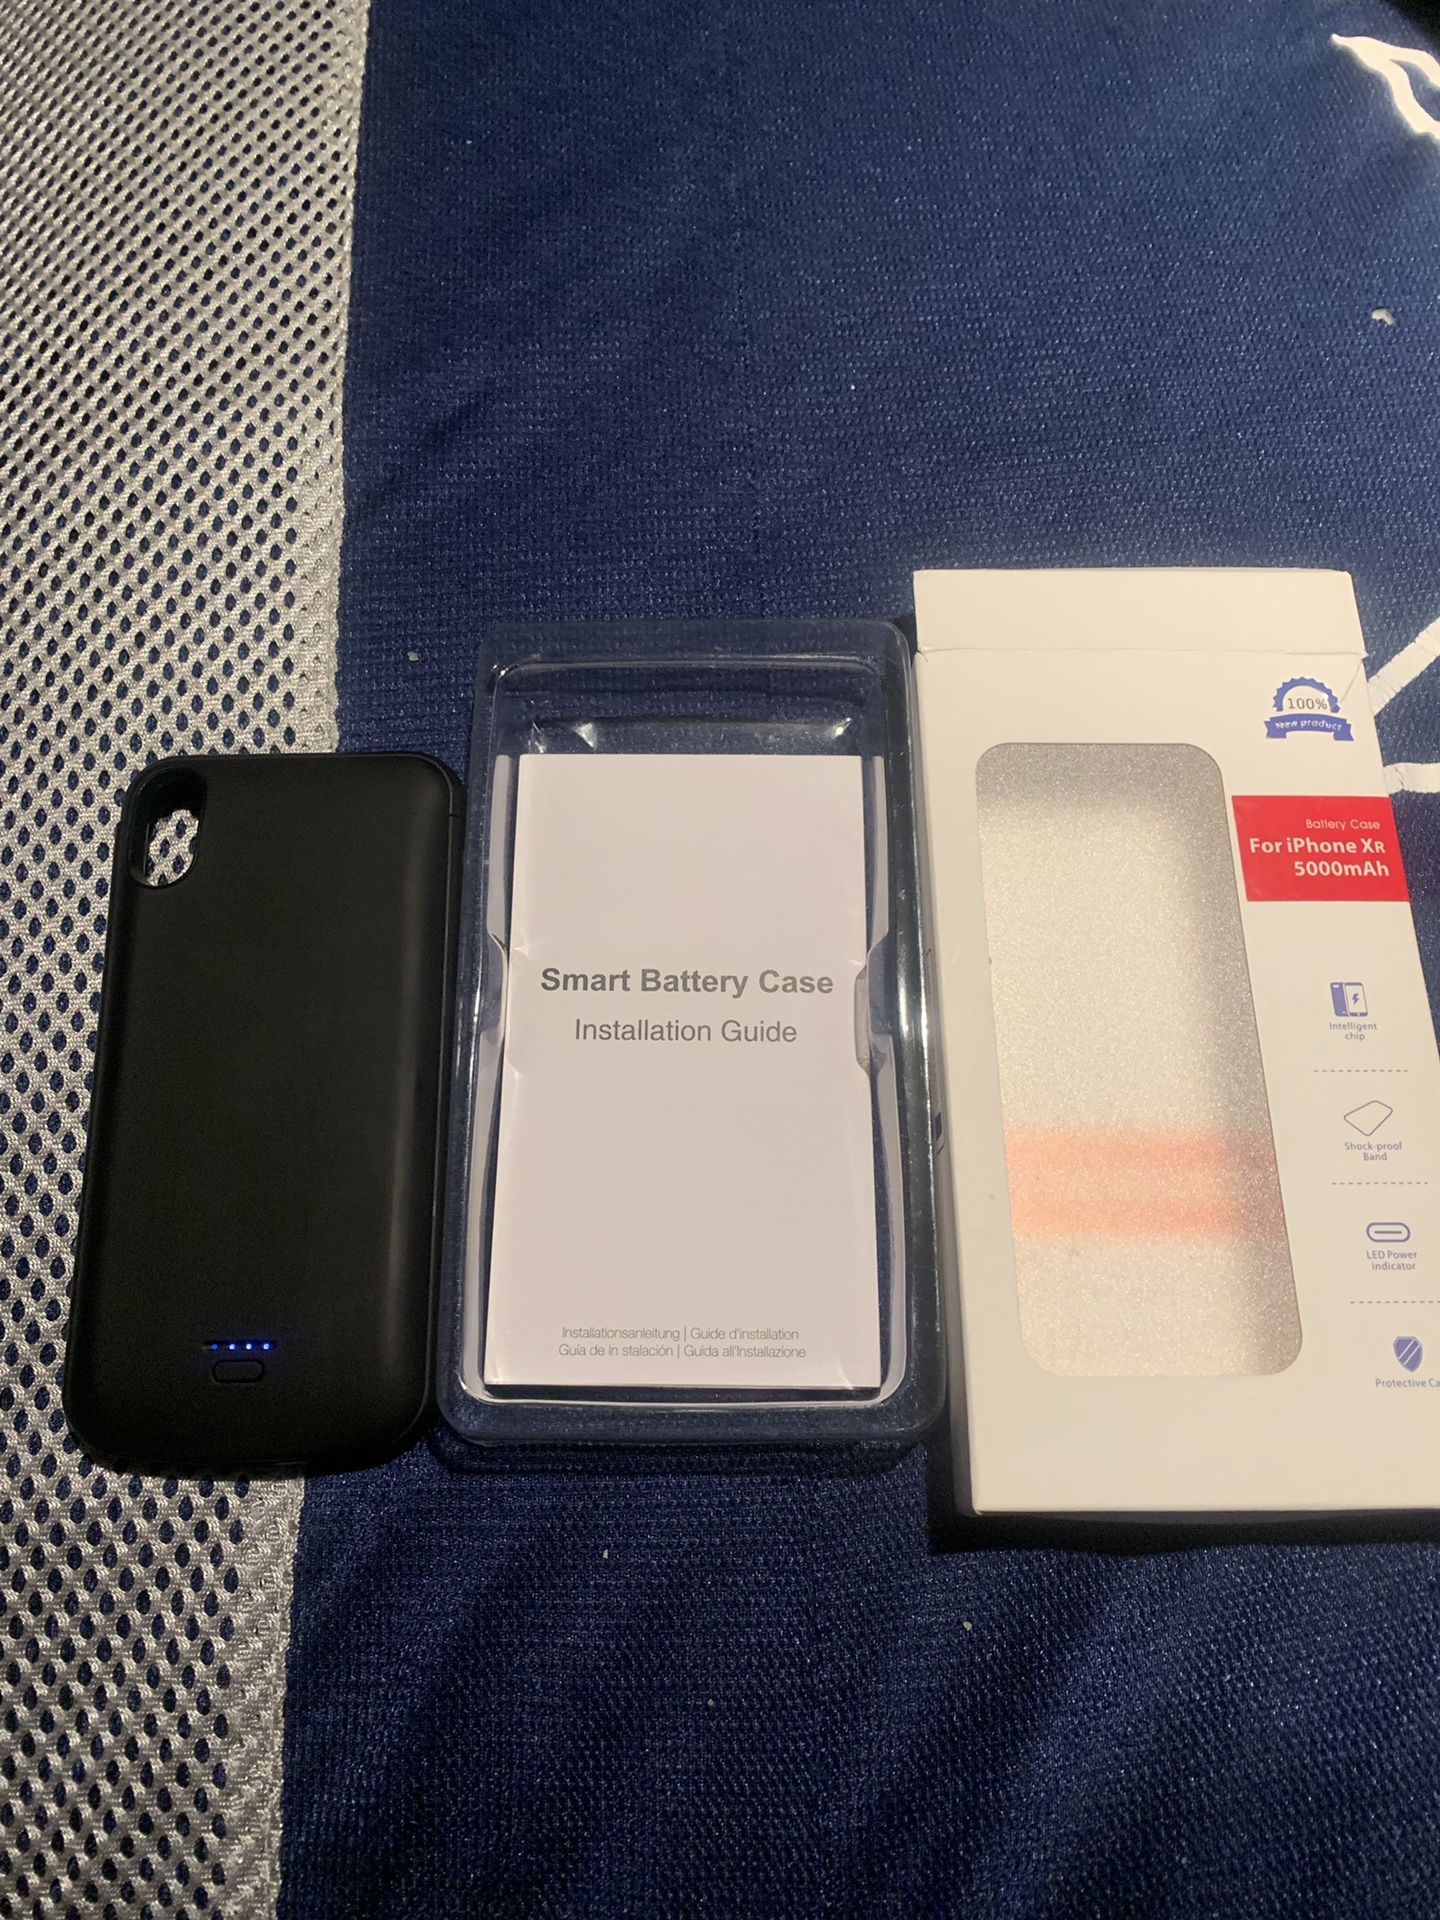 Smart battery case iPhone XR 5000 mha